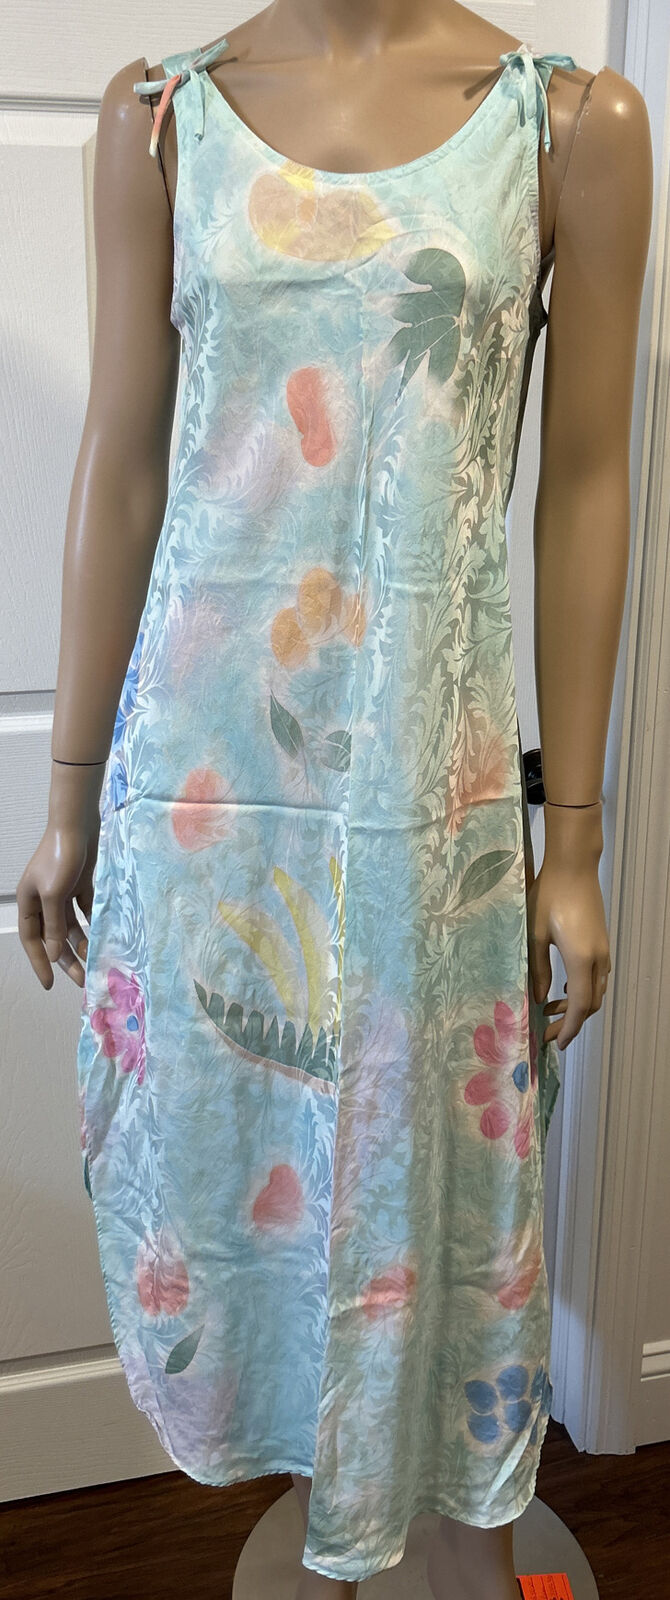 Floral Print Pastel Nightgown 100% Silk - image 1